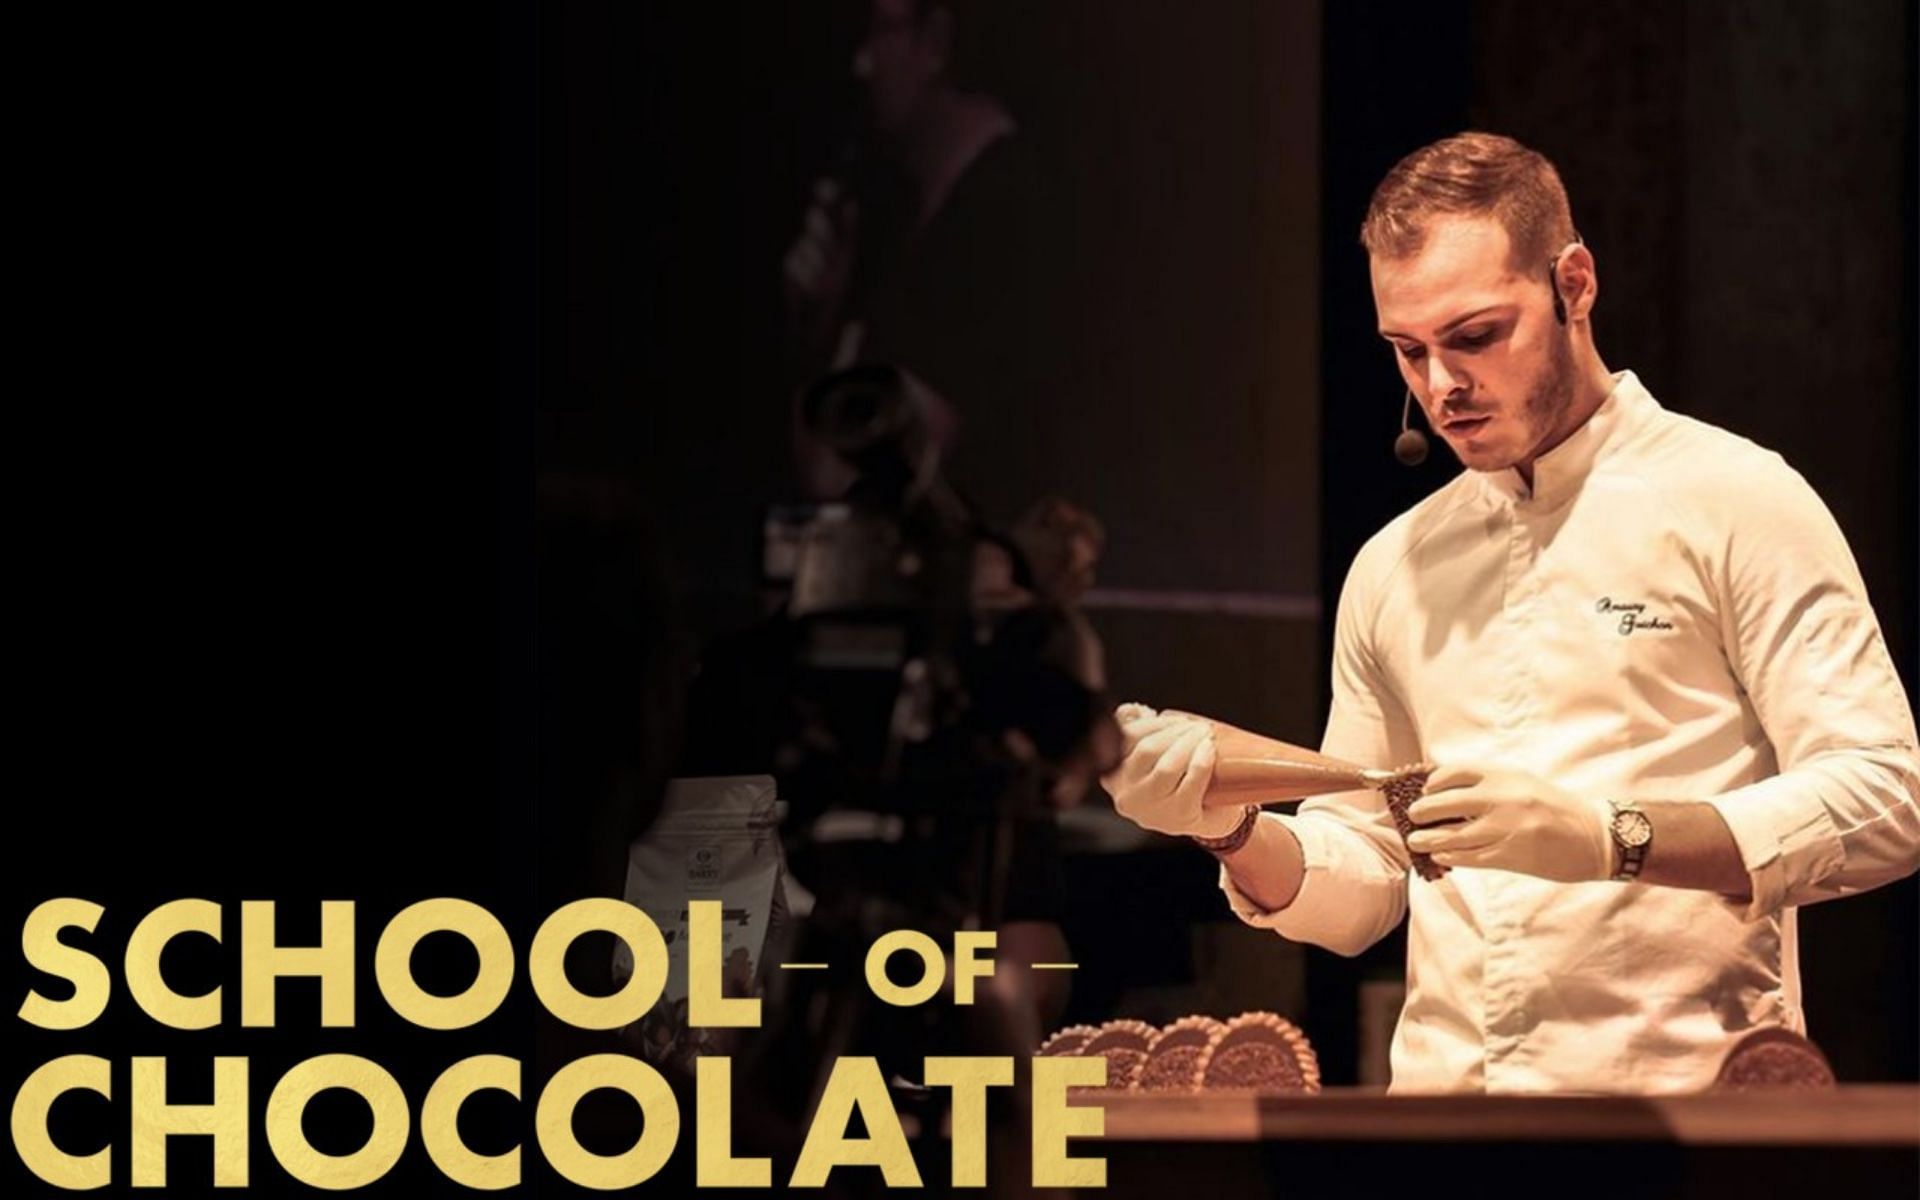 &lsquo;School of Chocolate&rsquo; premiers on Netflix (Image via Sportskeeda)